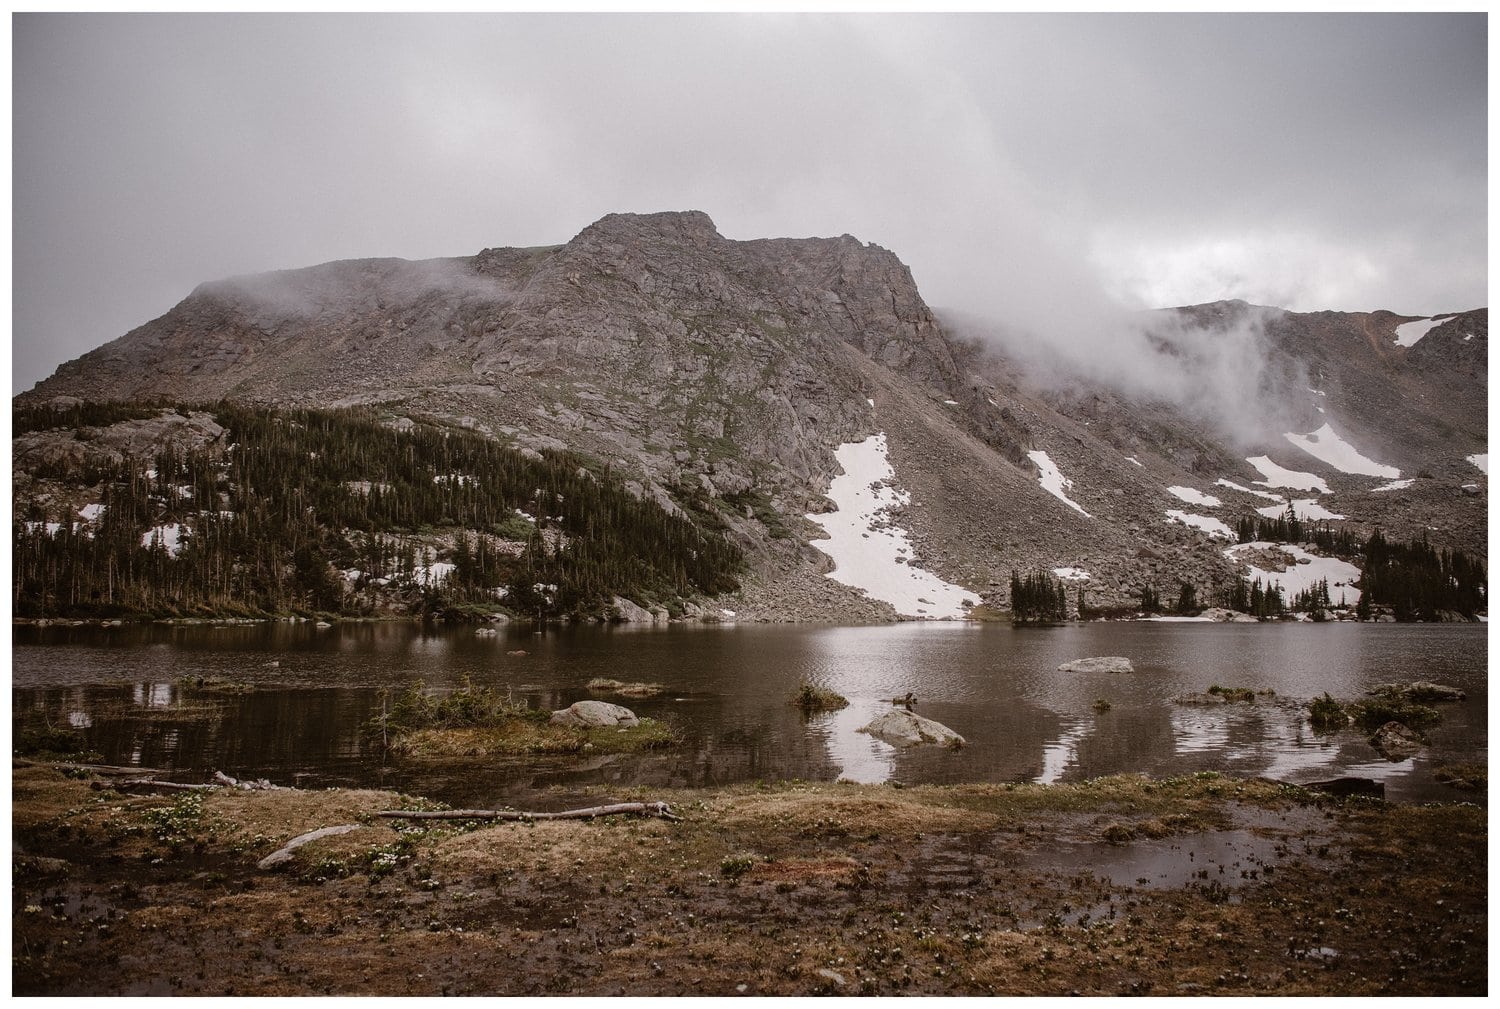 Landscape of a cloudy, grey sky over mountains and a high alpine lake near Boulder, Colorado.